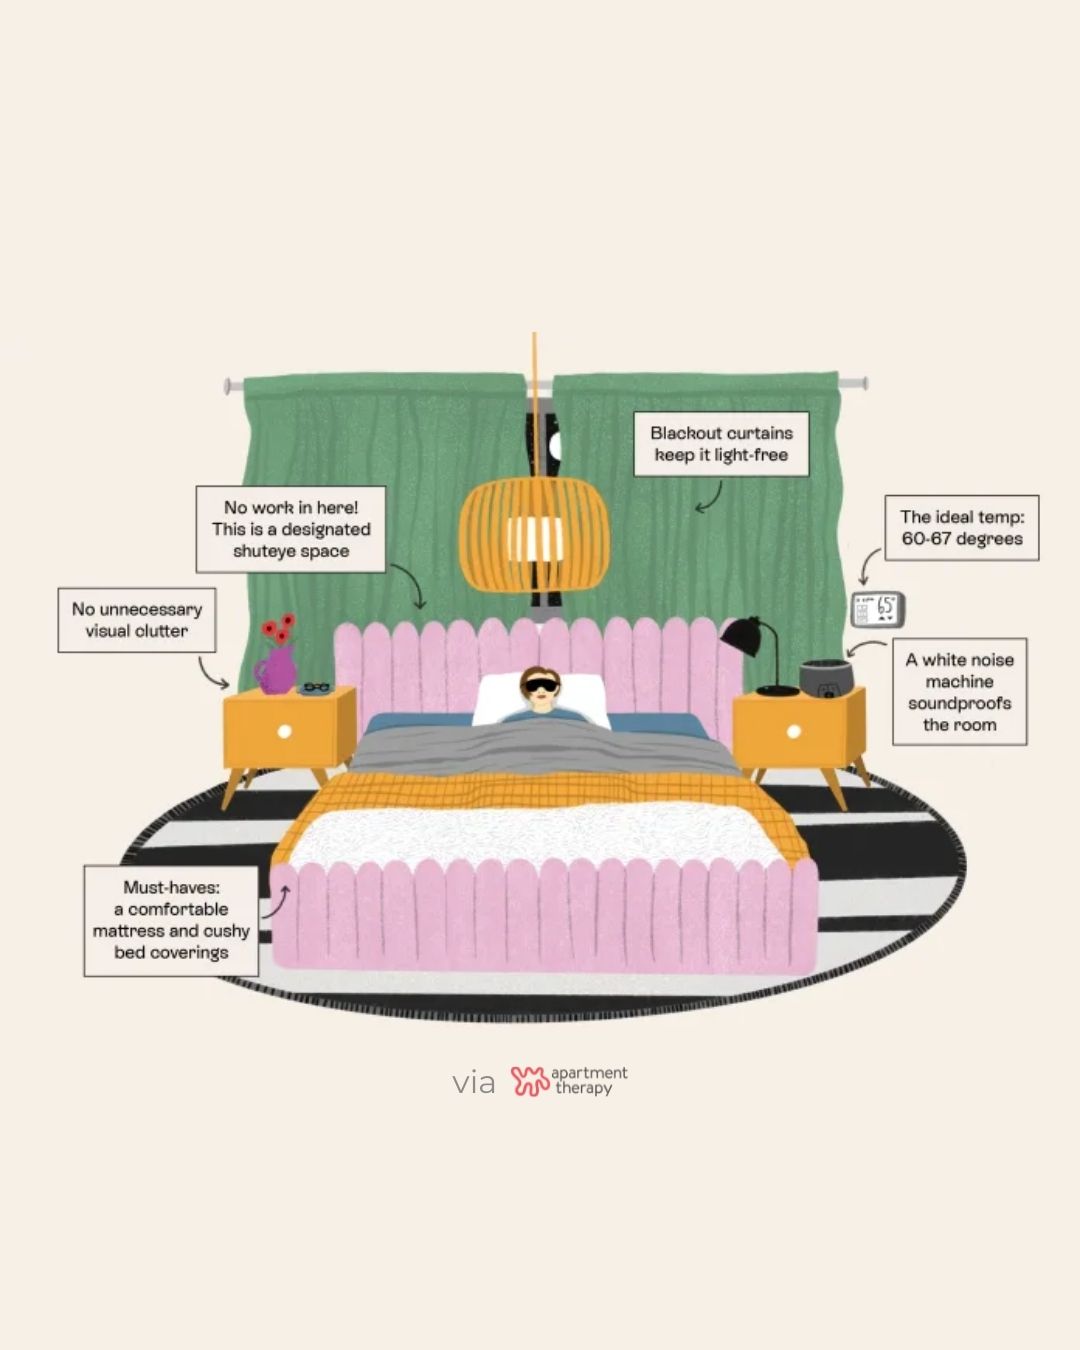 perfect bedroom interior design for better sleep, according to sleep experts